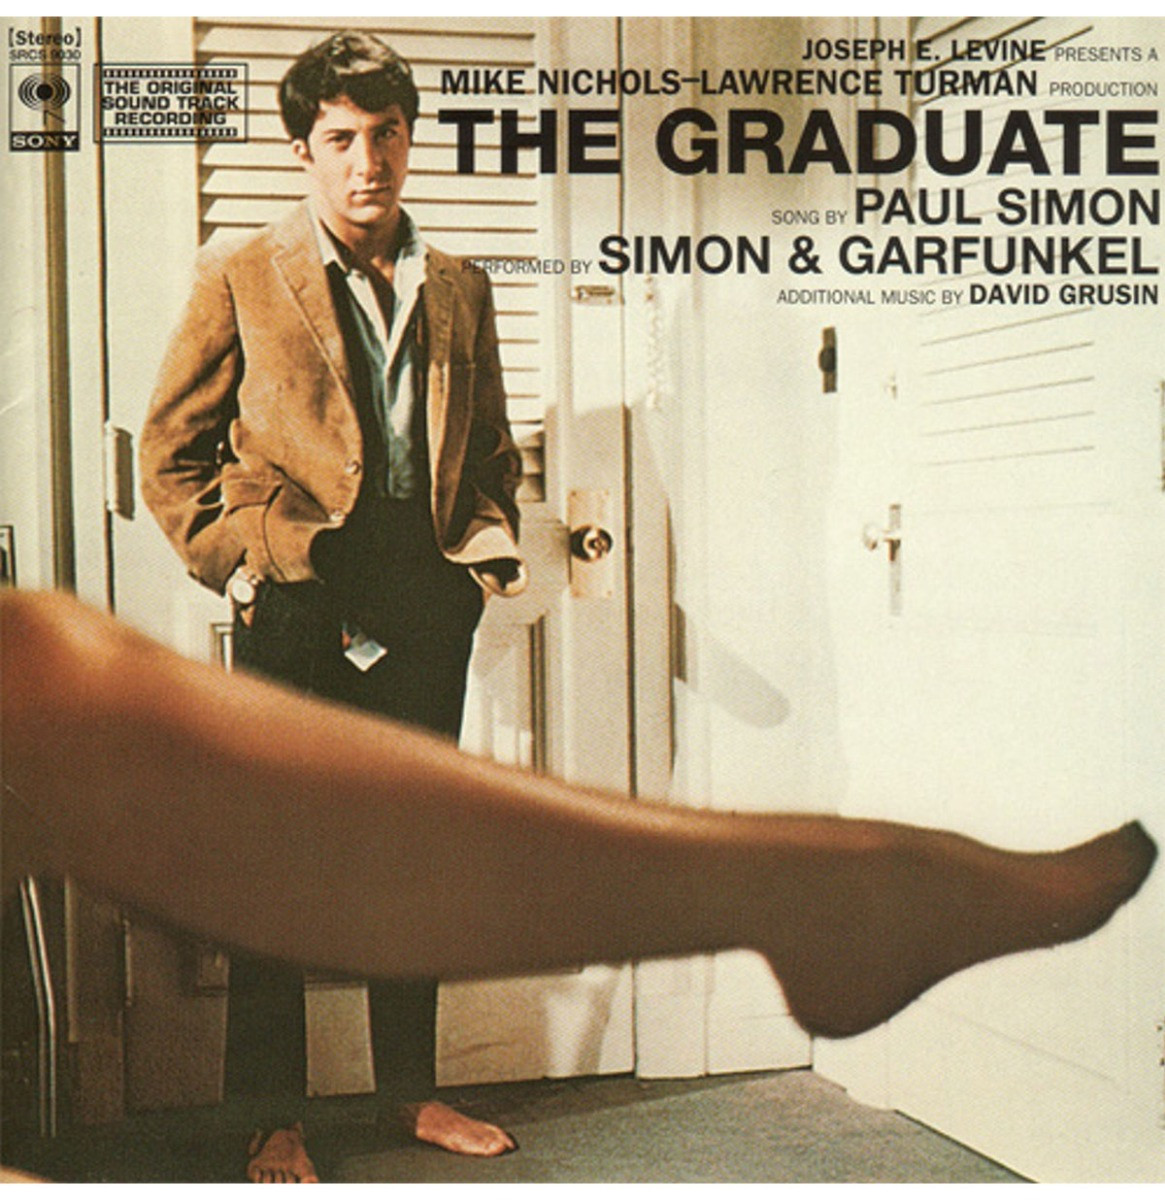 Simon & Garfunkel, Dave Grusin - The Graduate (Original Sound Track Recording) LP